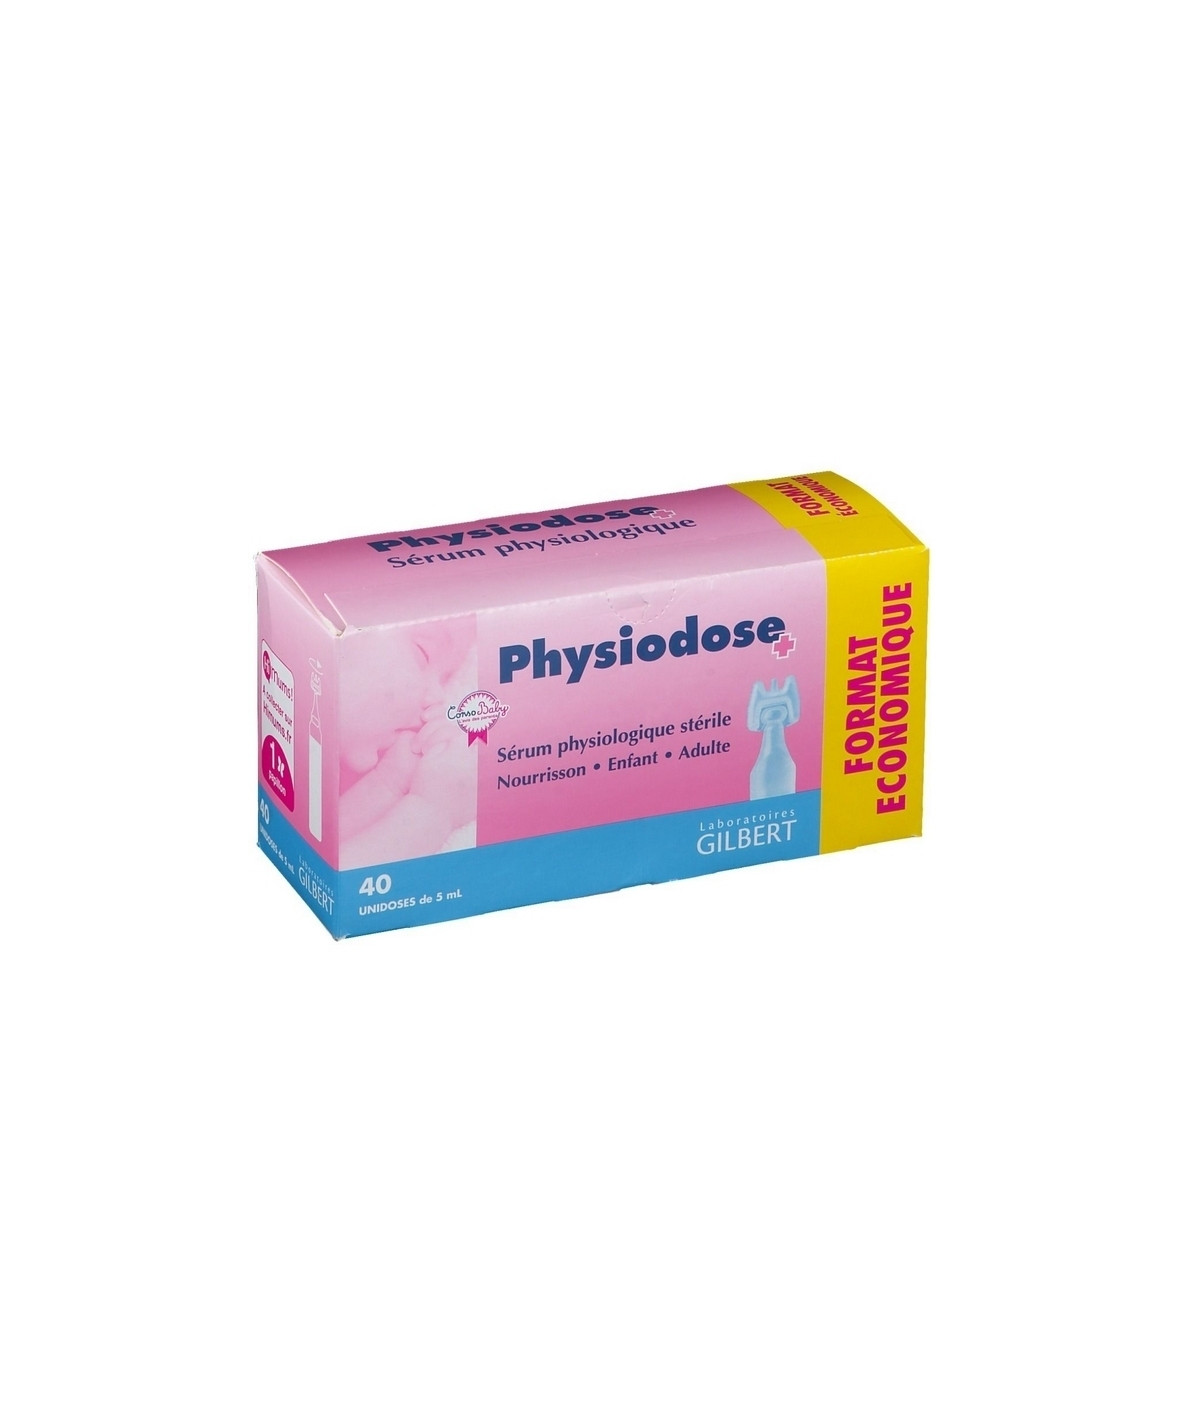 Physiodose sérum physiologique 40 unidoses de 5 ml